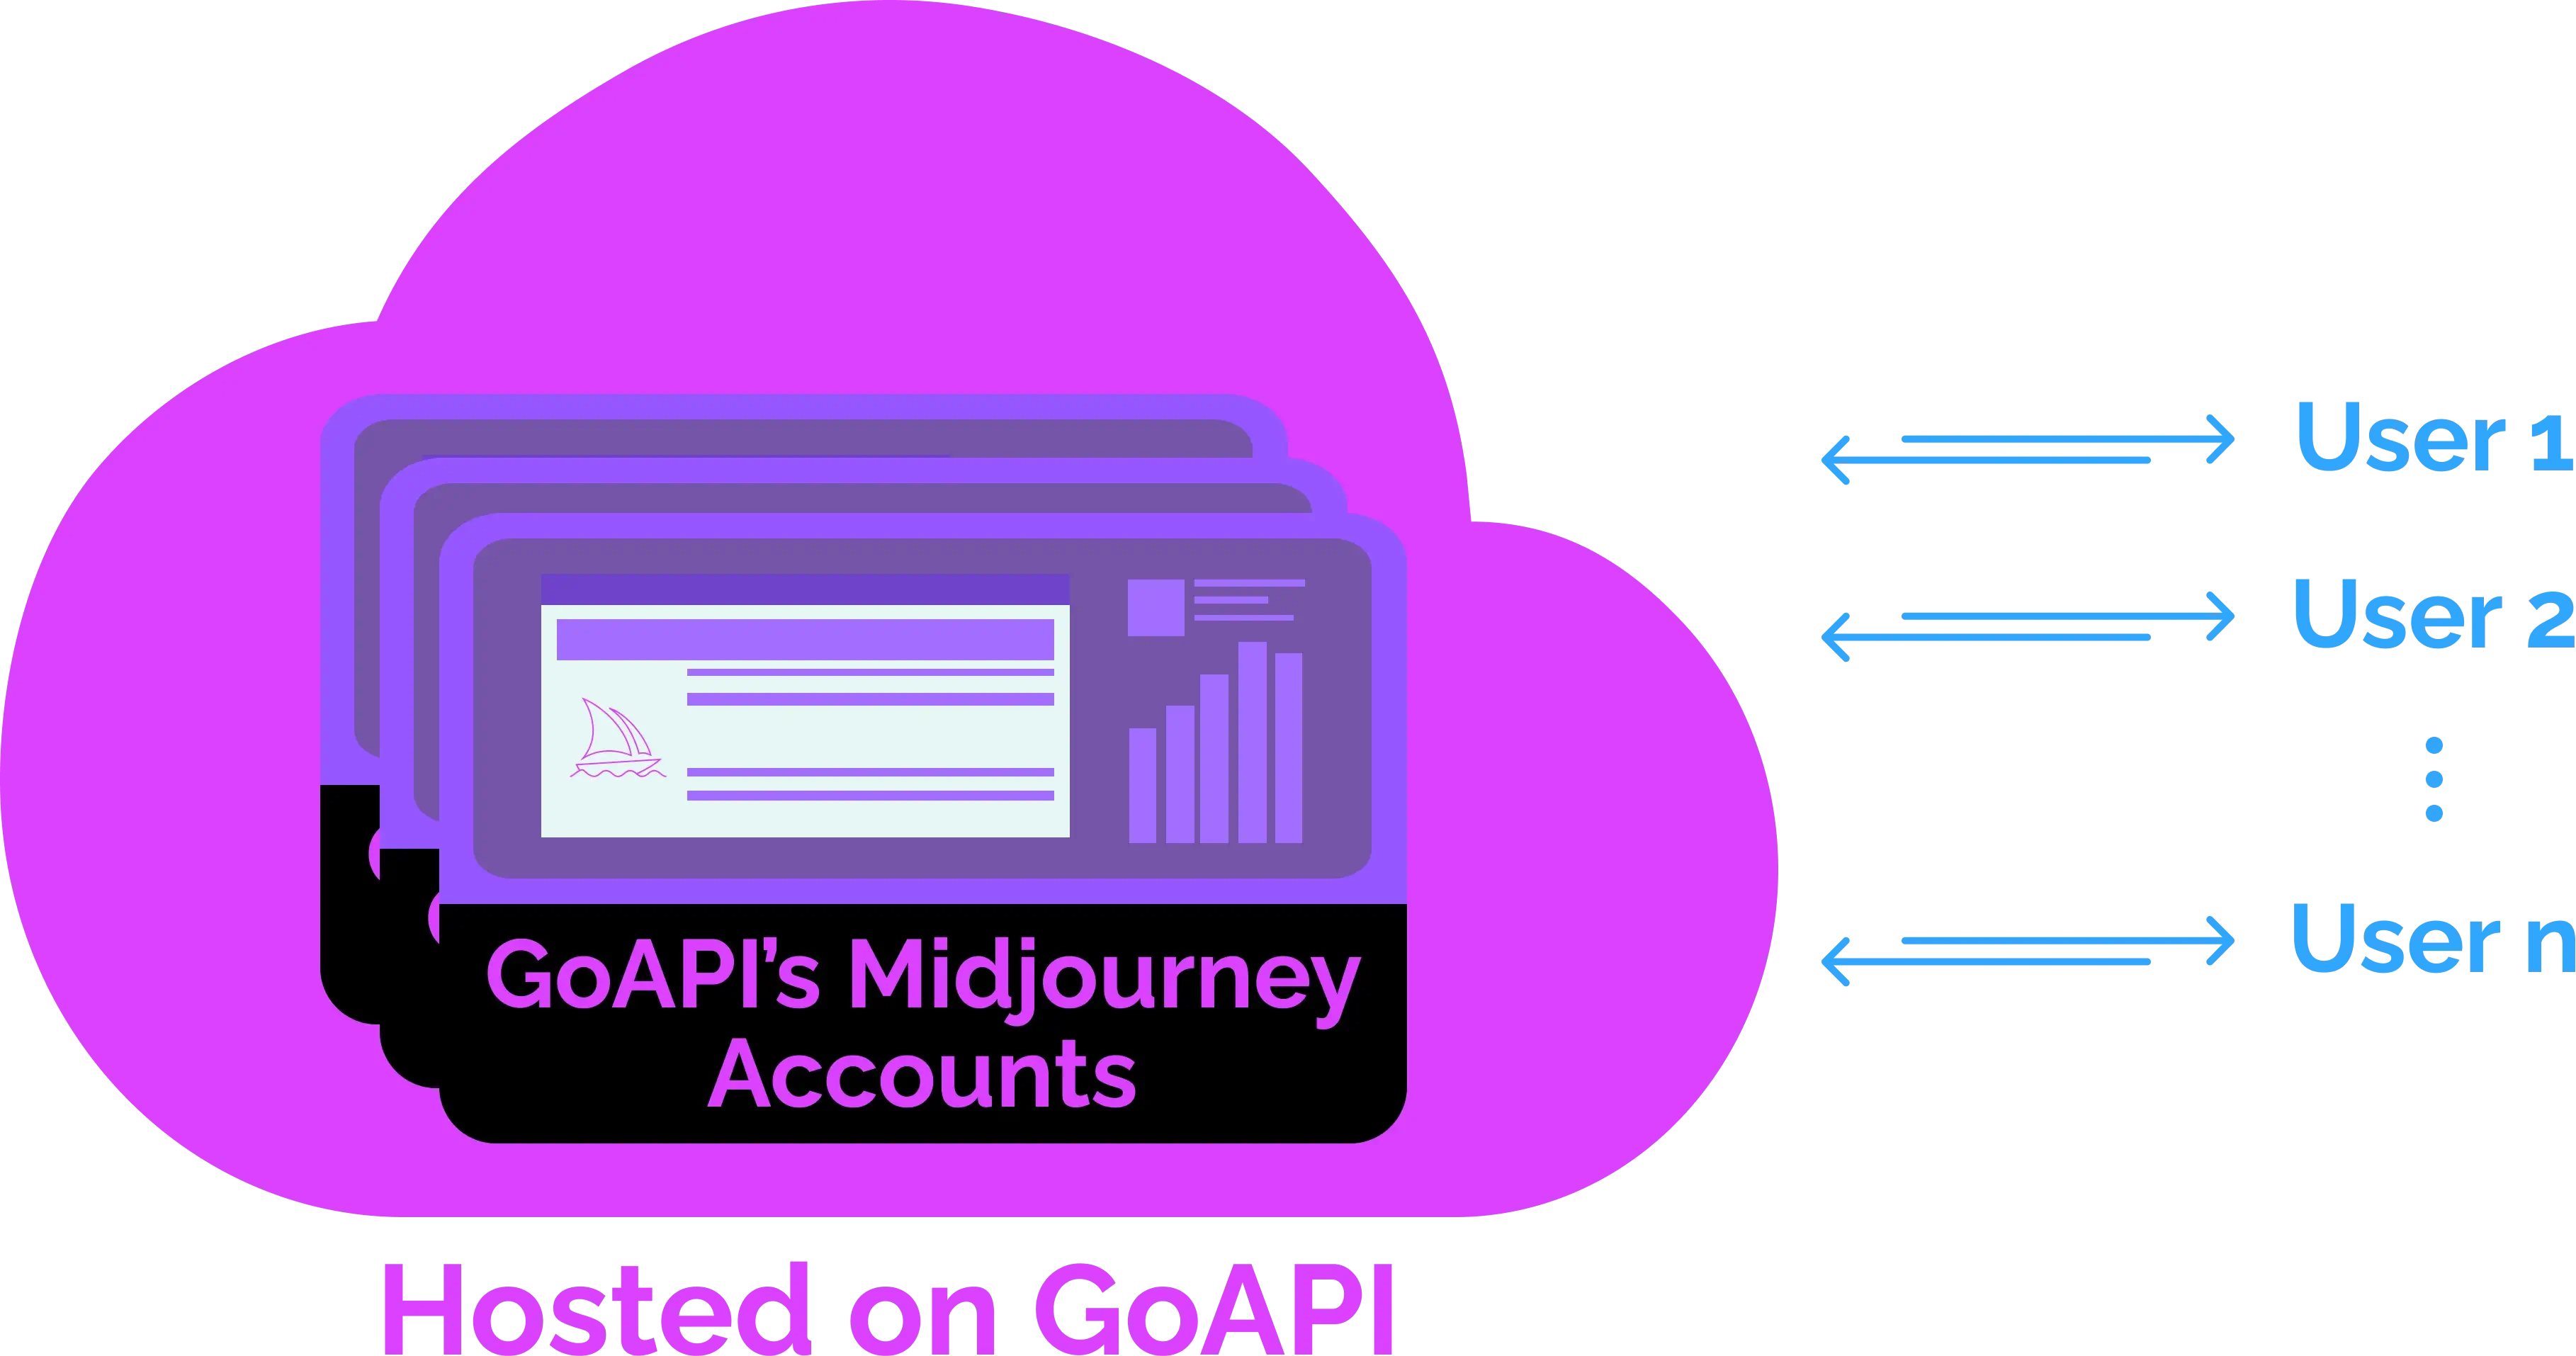 Graphics of how GoAPI's Midjourney API PPU plan works